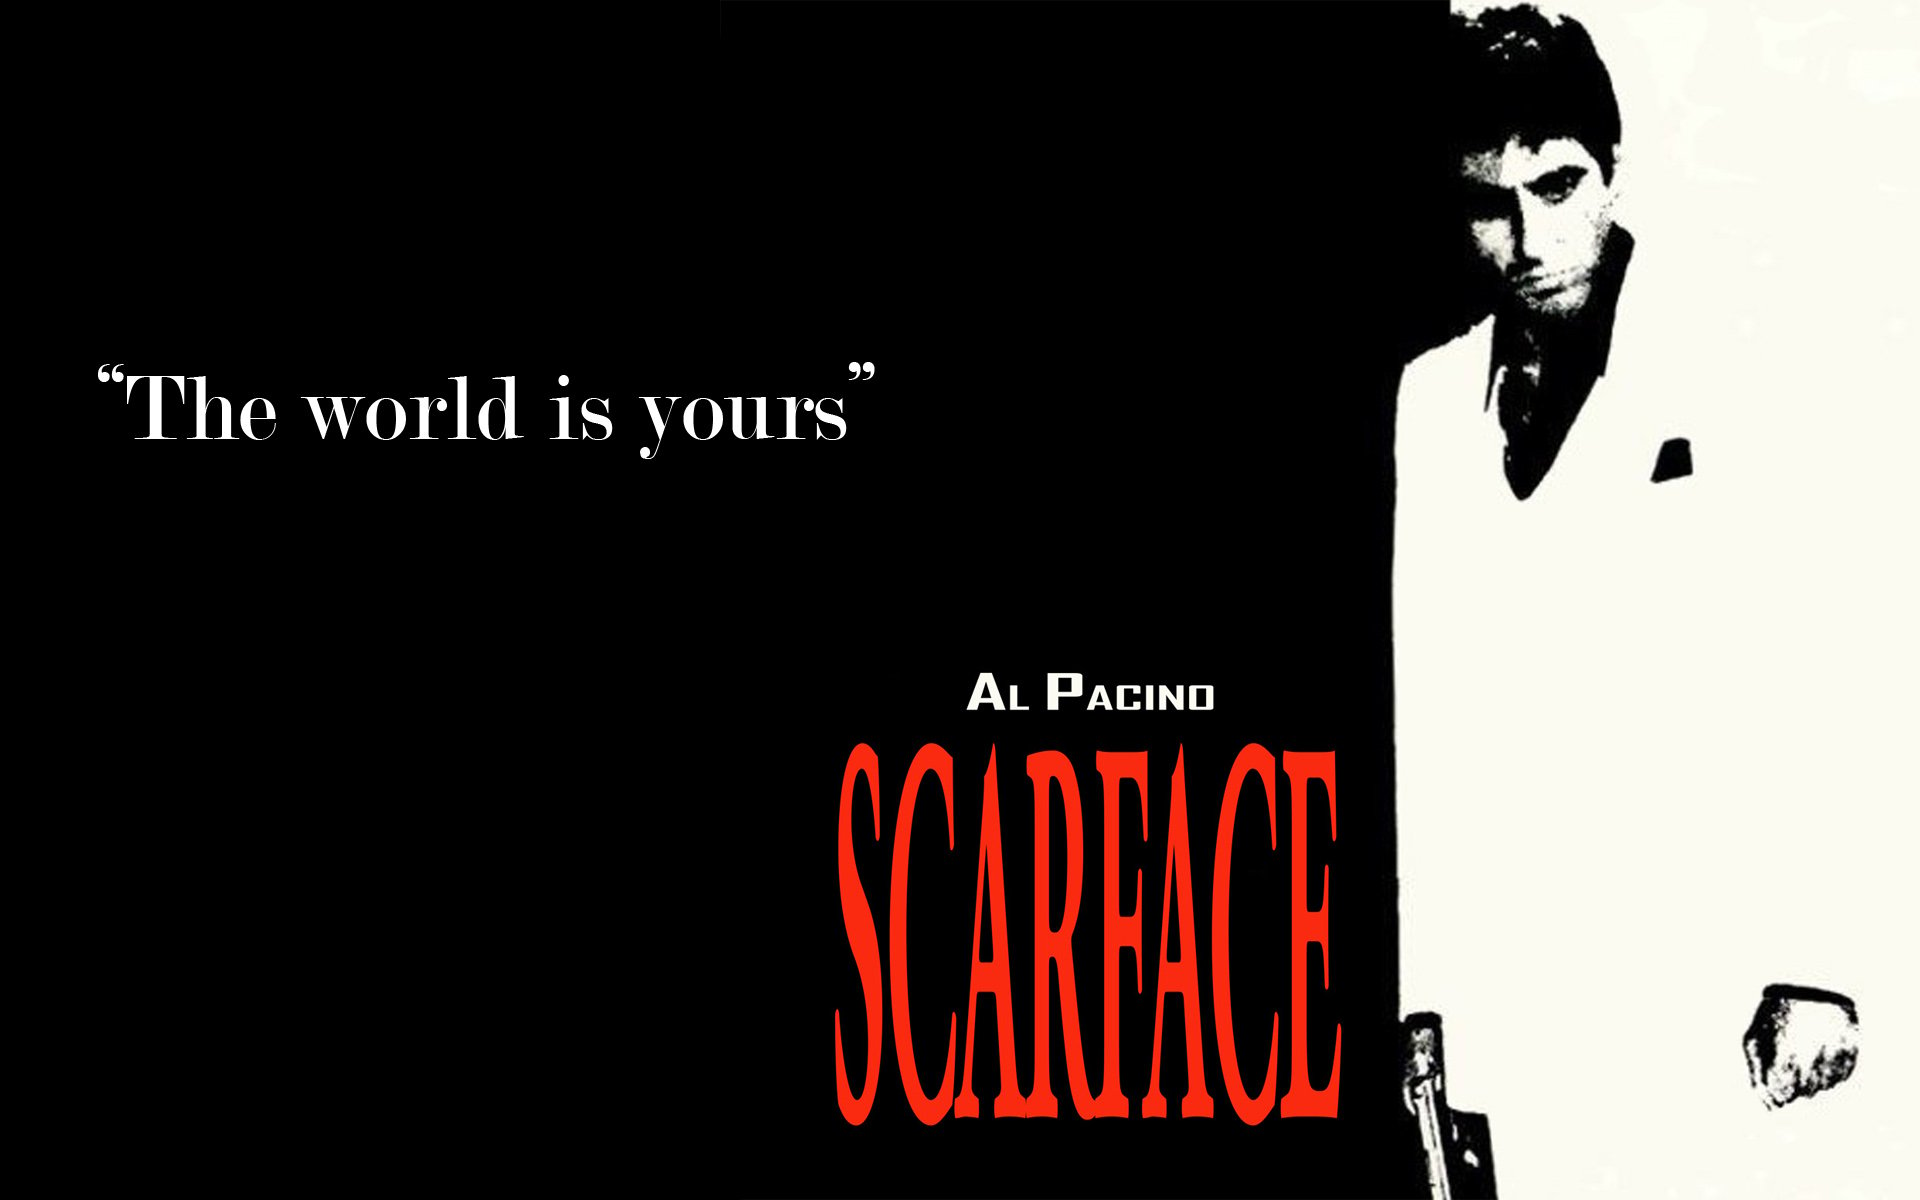 75+] Free Scarface Wallpapers - WallpaperSafari